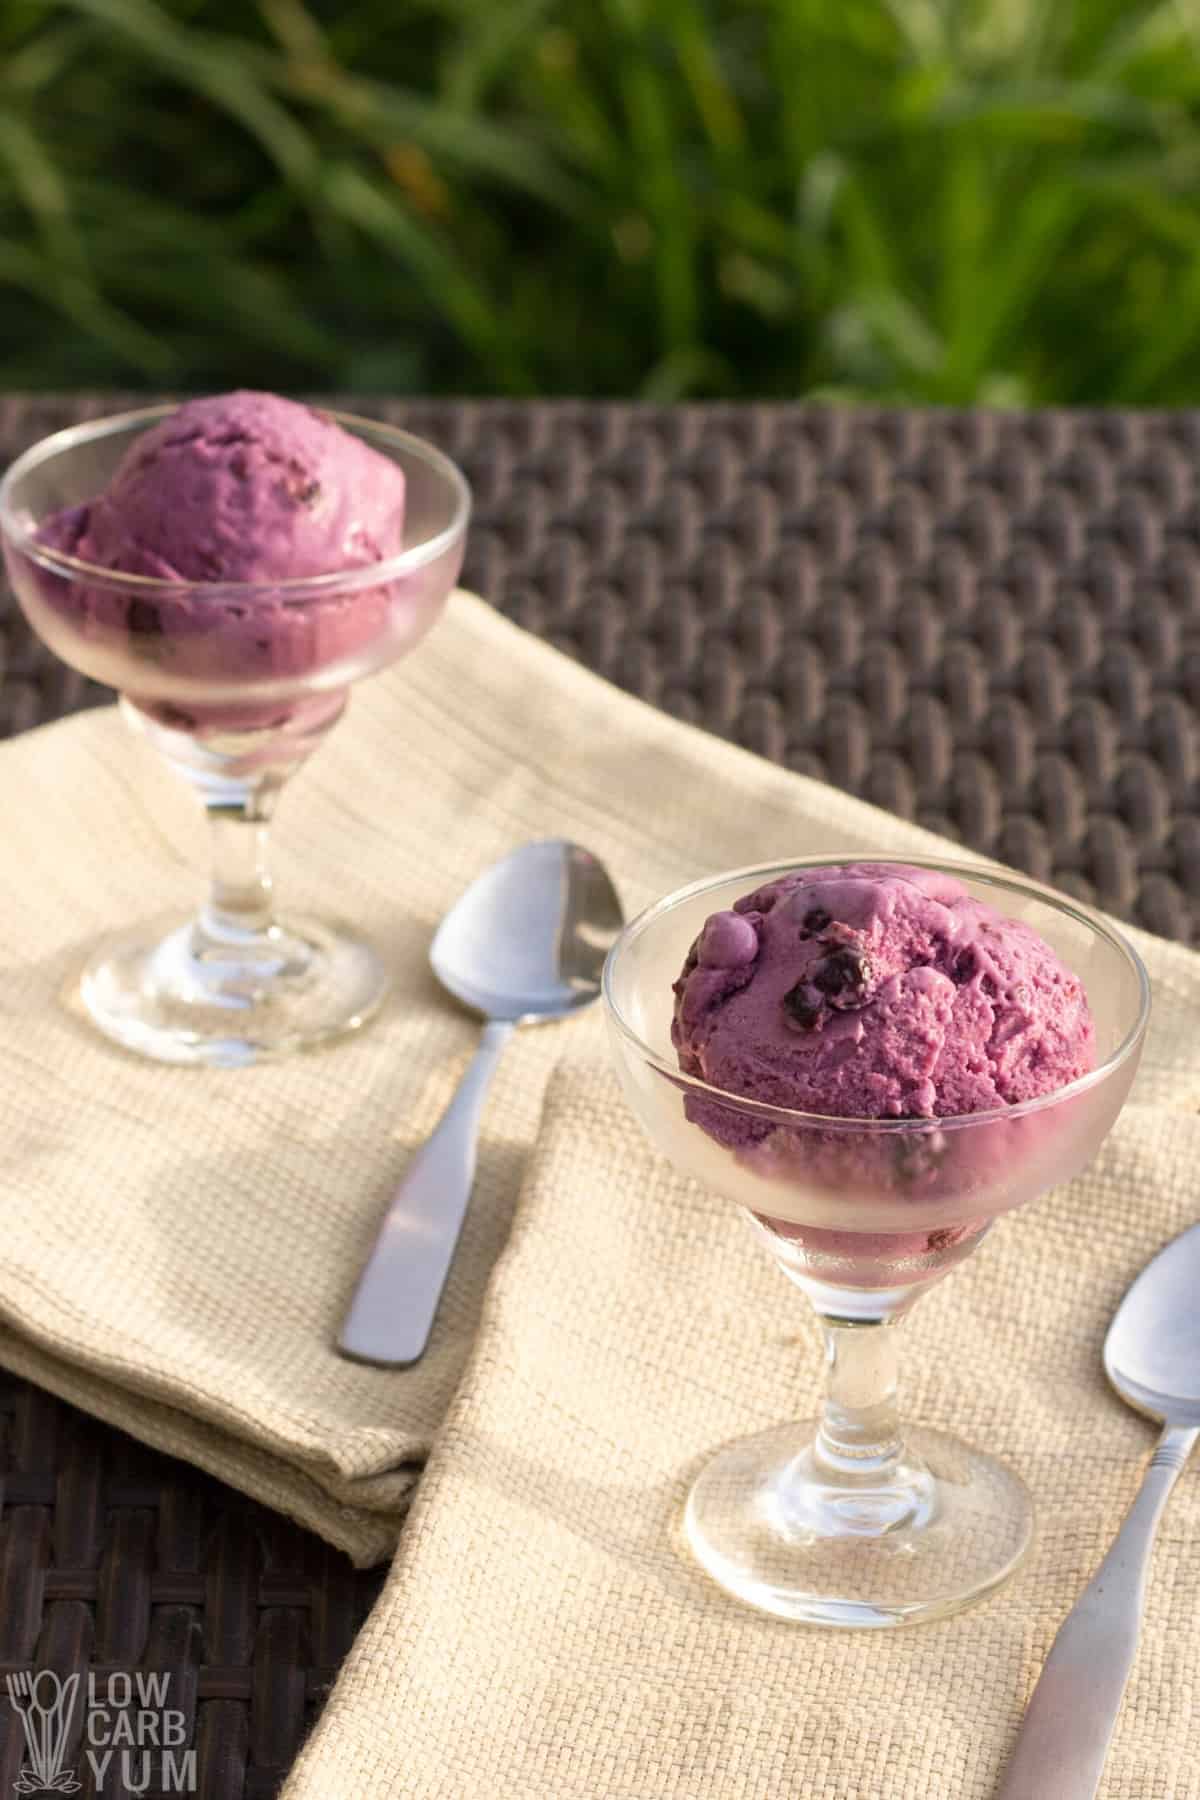 keto blueberry ice cream in glass dessert dishes.